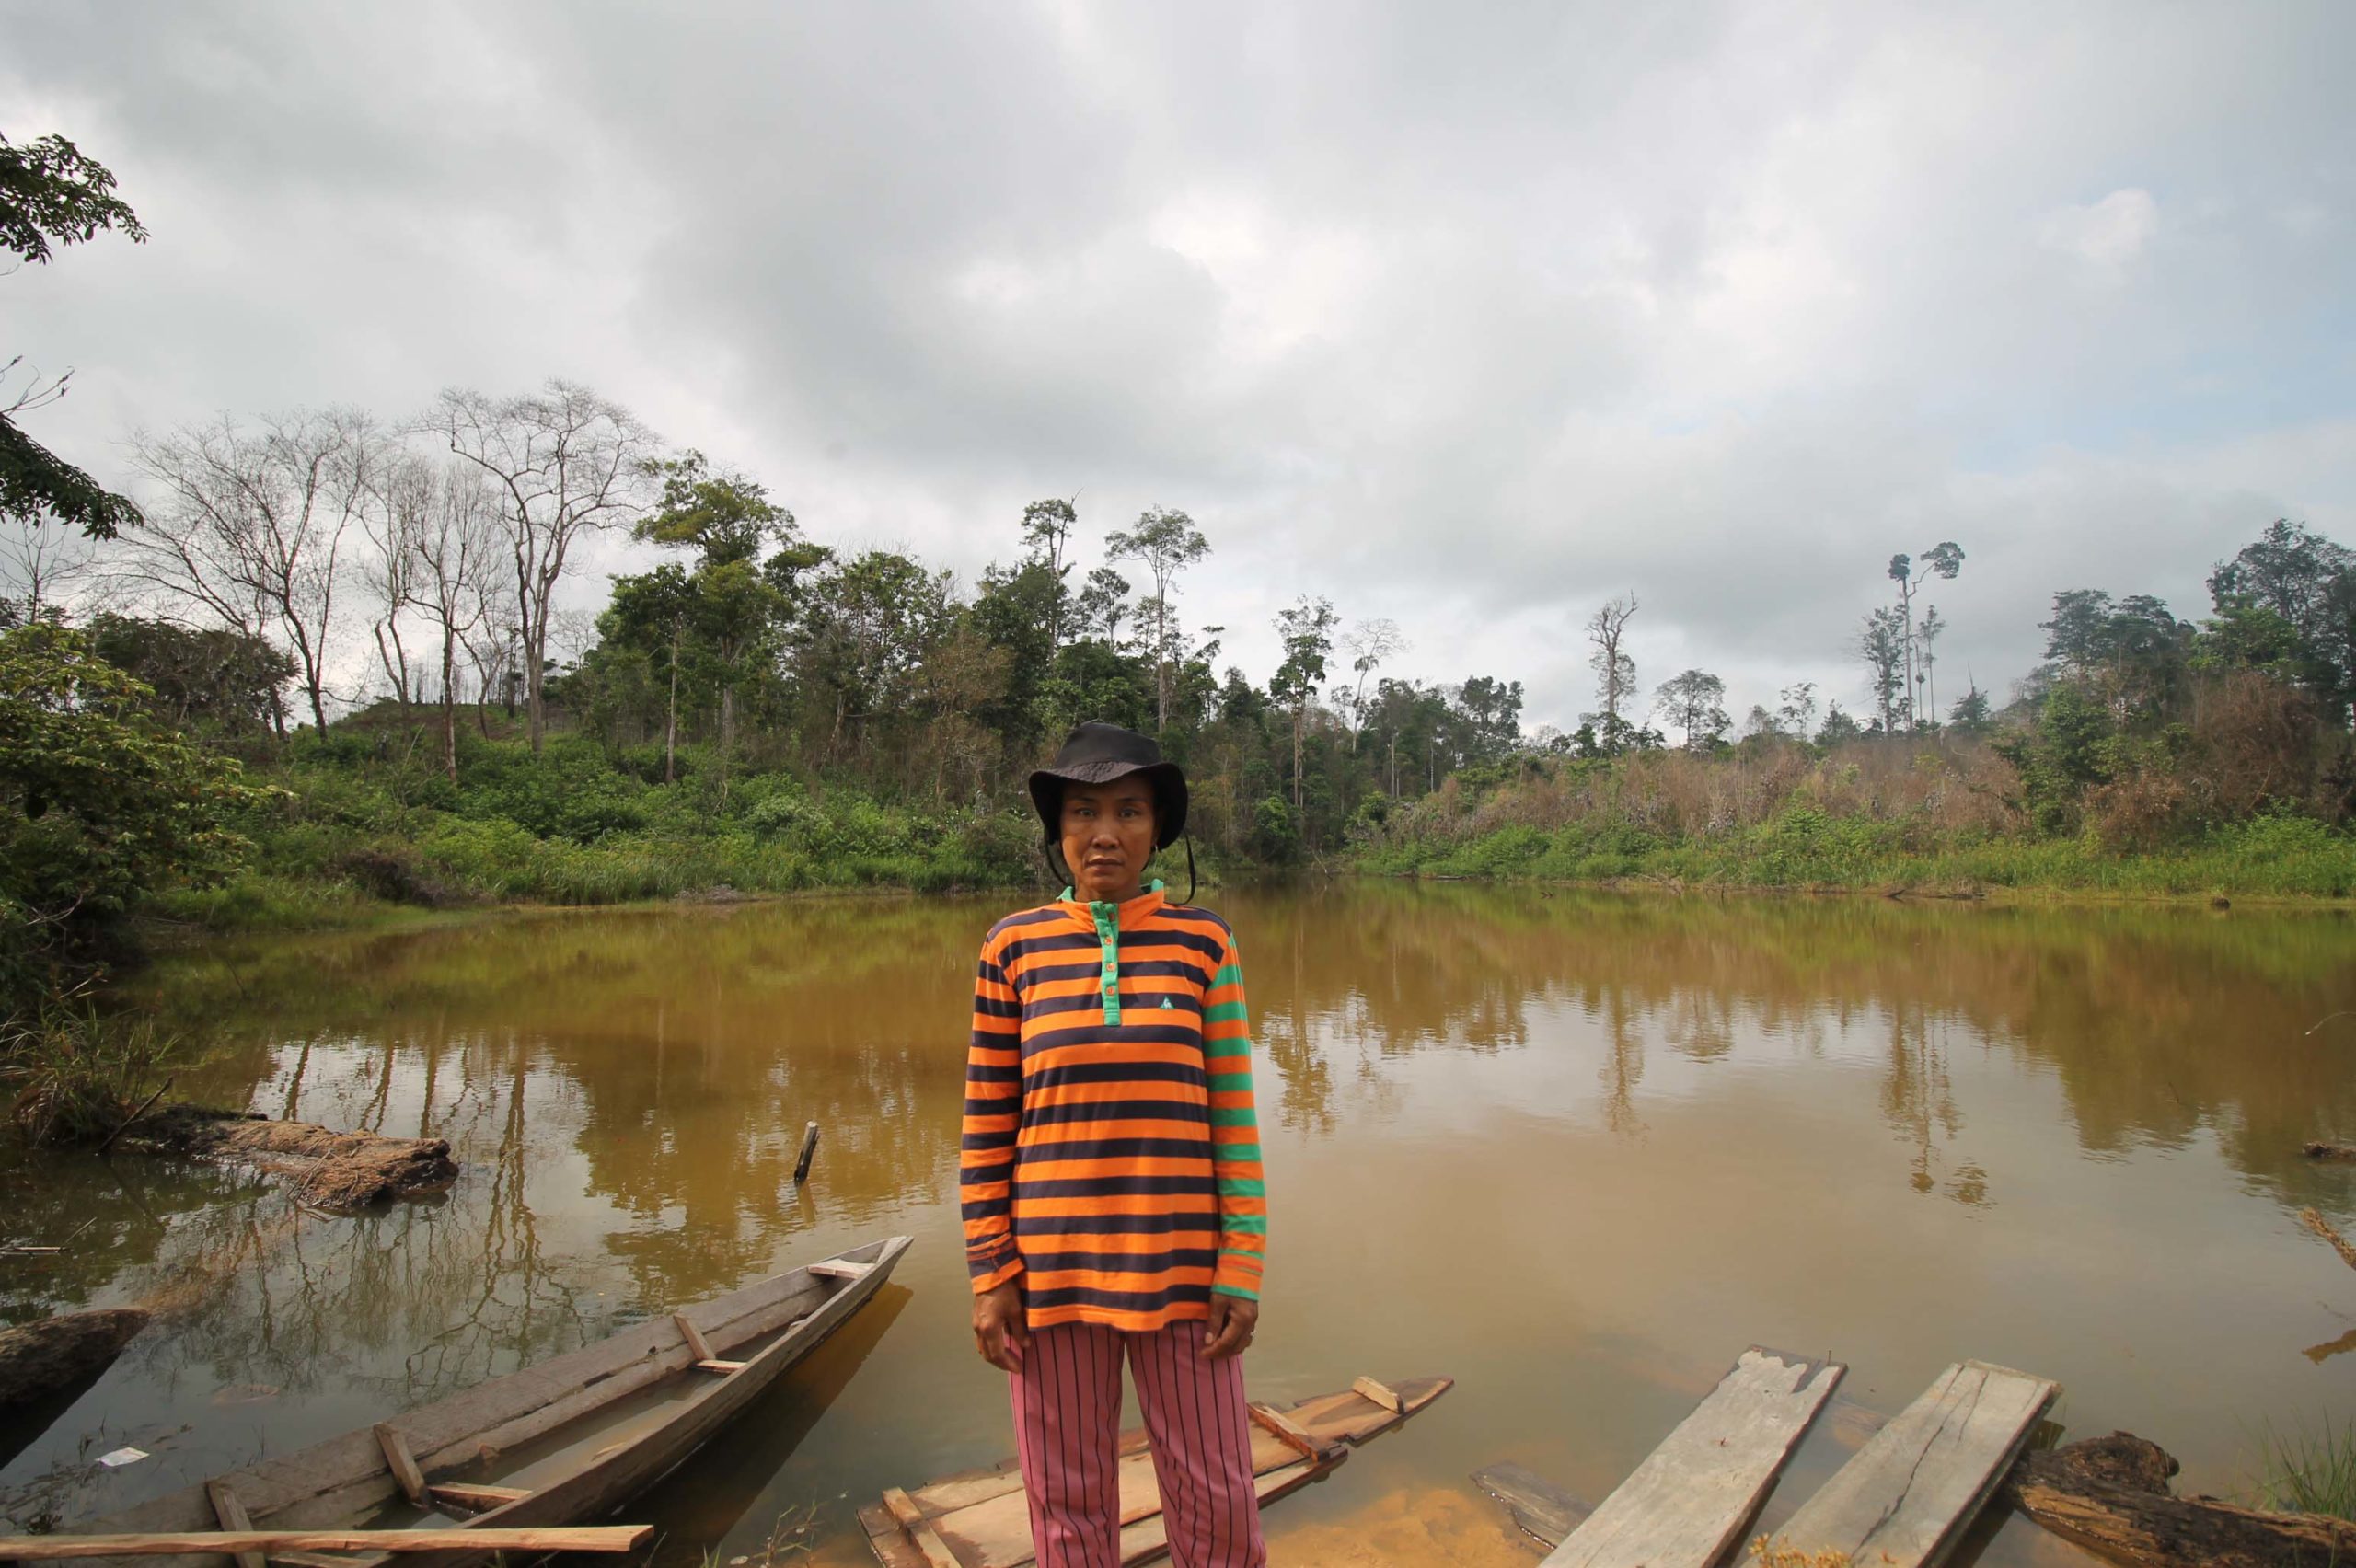  Teguh Santika, perempuan Batin Sembilan, selama tiga bulan, Teguh bersama saudara perempuannya menanam 7.000 bibit tanaman hutan seluas 70 hektar. Foto: Elviza Diana/ Mongabay Indonesia